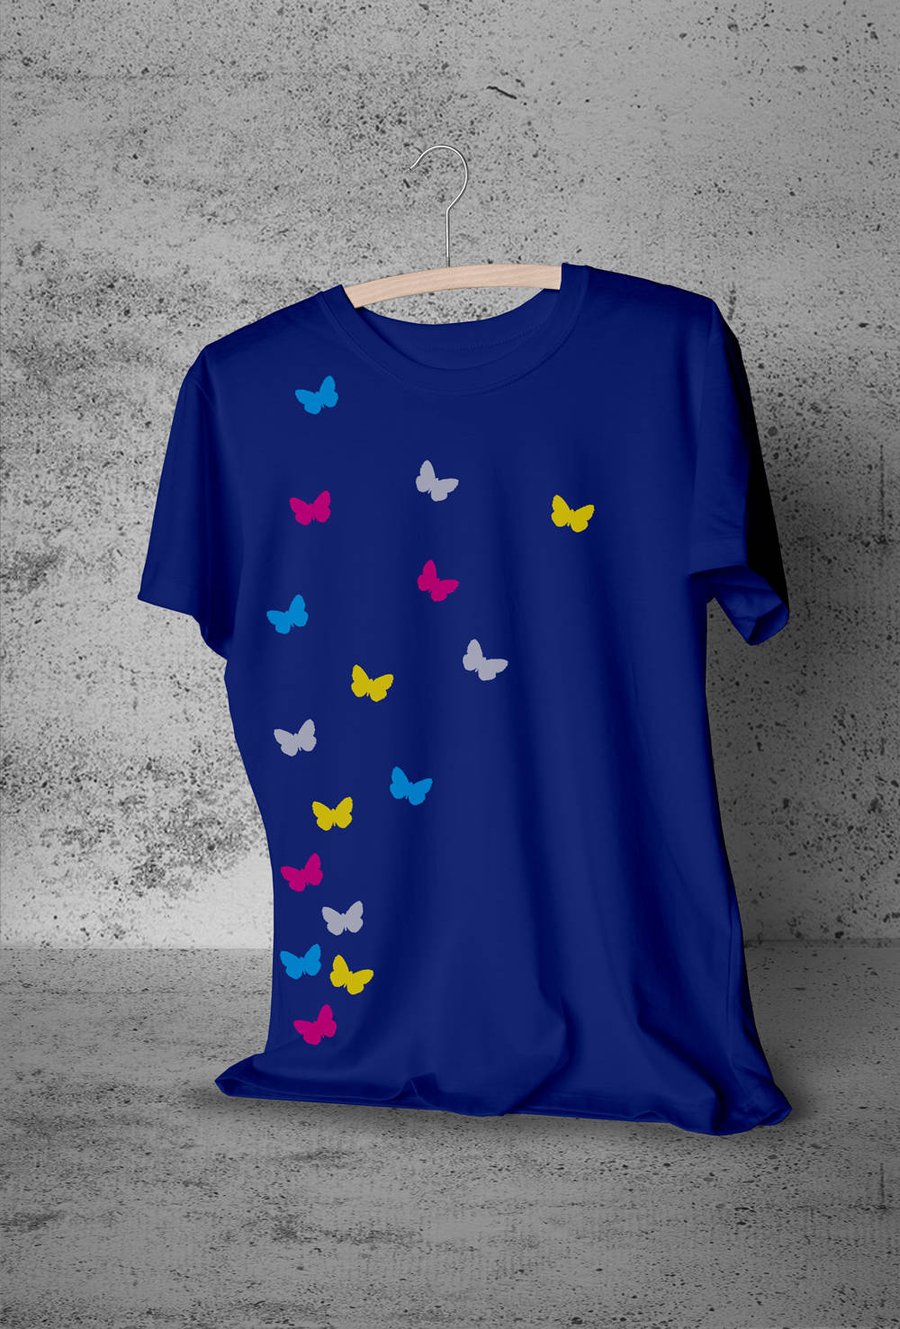 Flutterbyes-Custom T-shirt